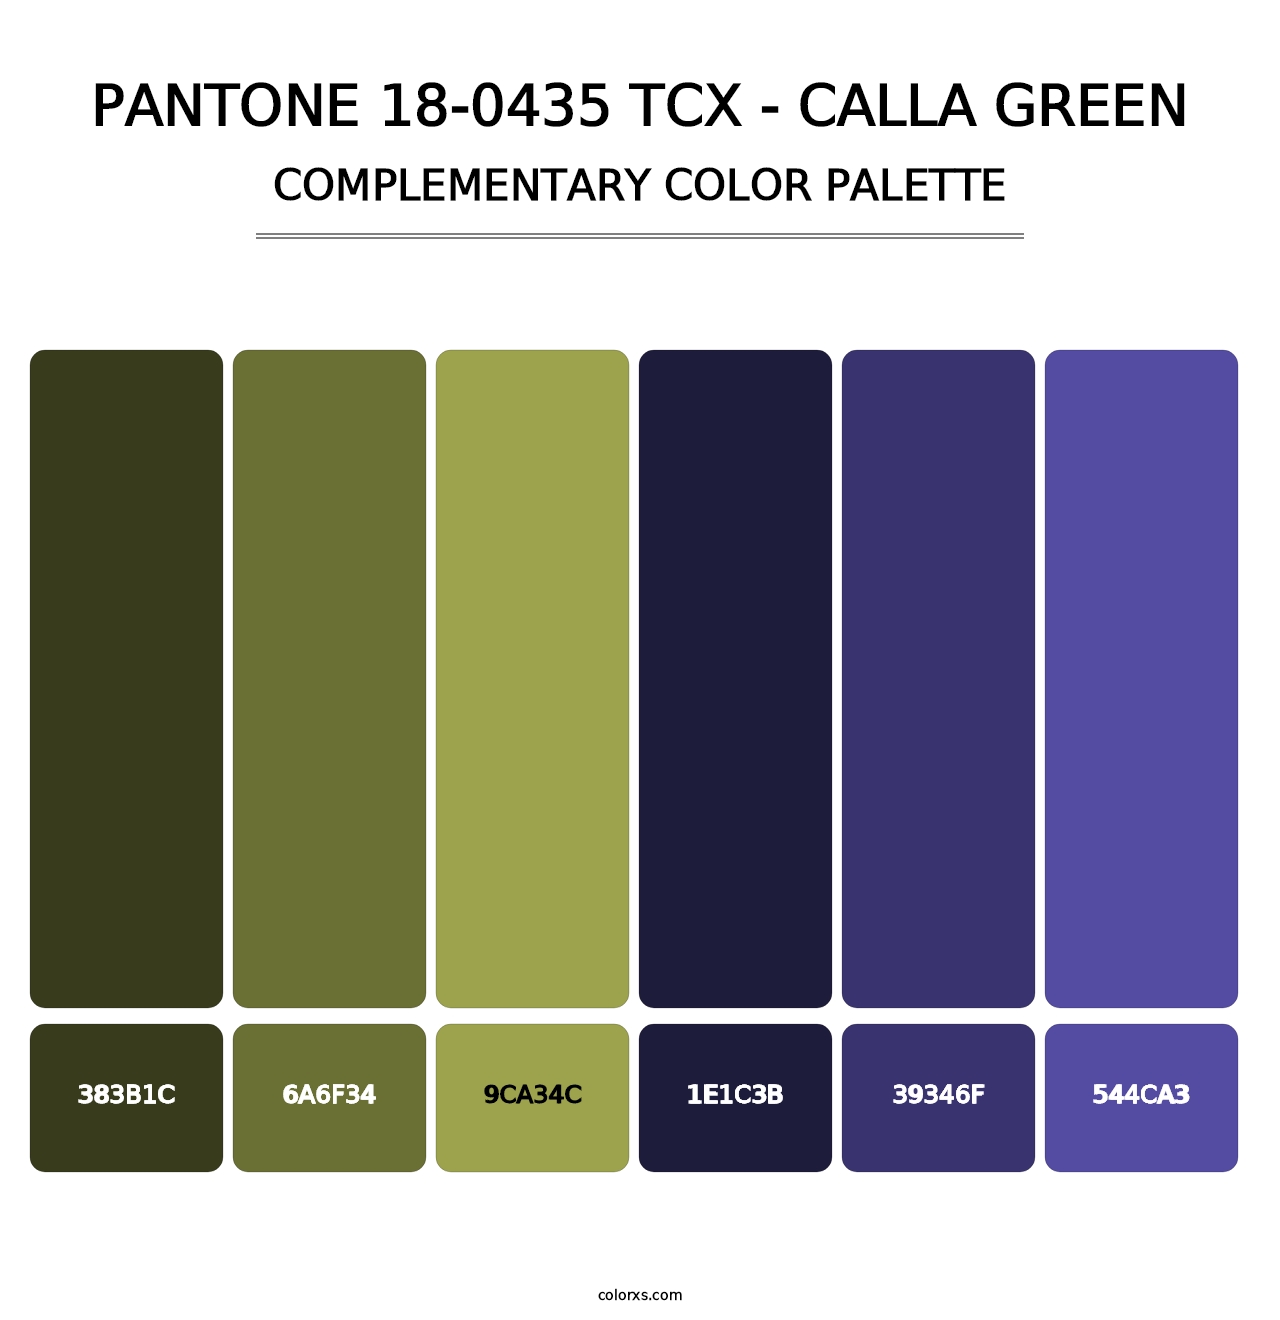 PANTONE 18-0435 TCX - Calla Green - Complementary Color Palette